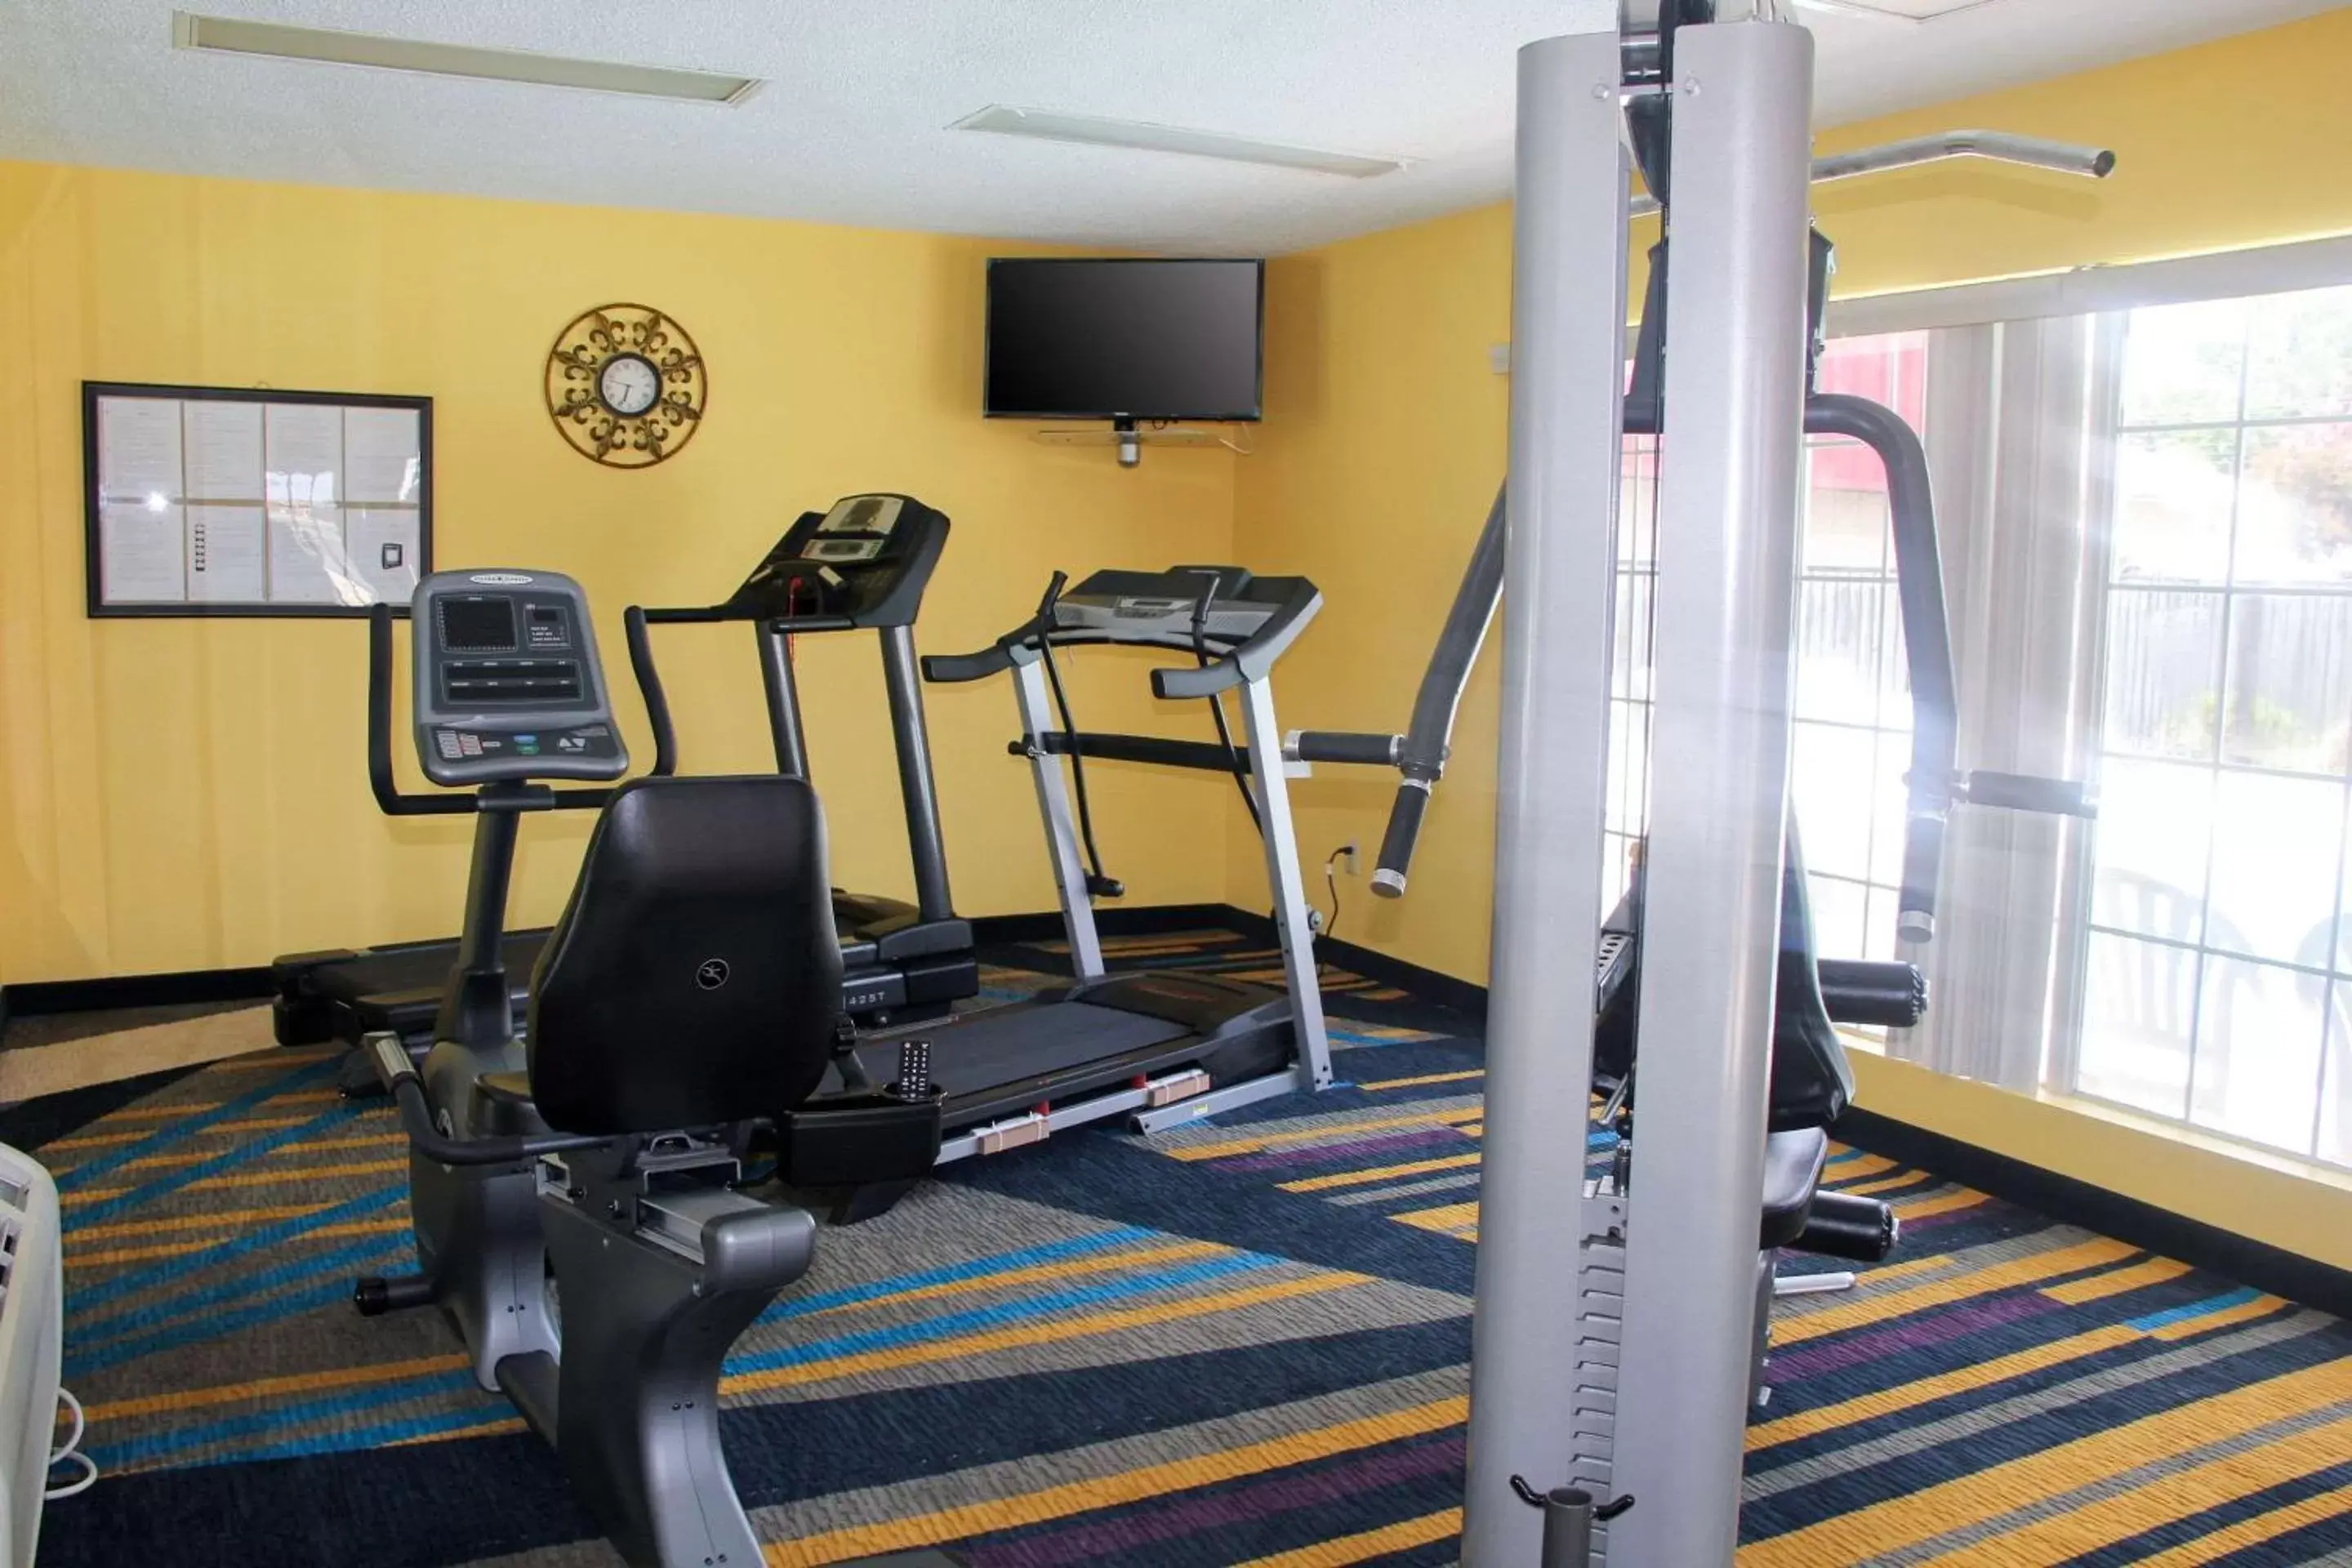 Fitness centre/facilities, Fitness Center/Facilities in Quality Inn Albertville US 431